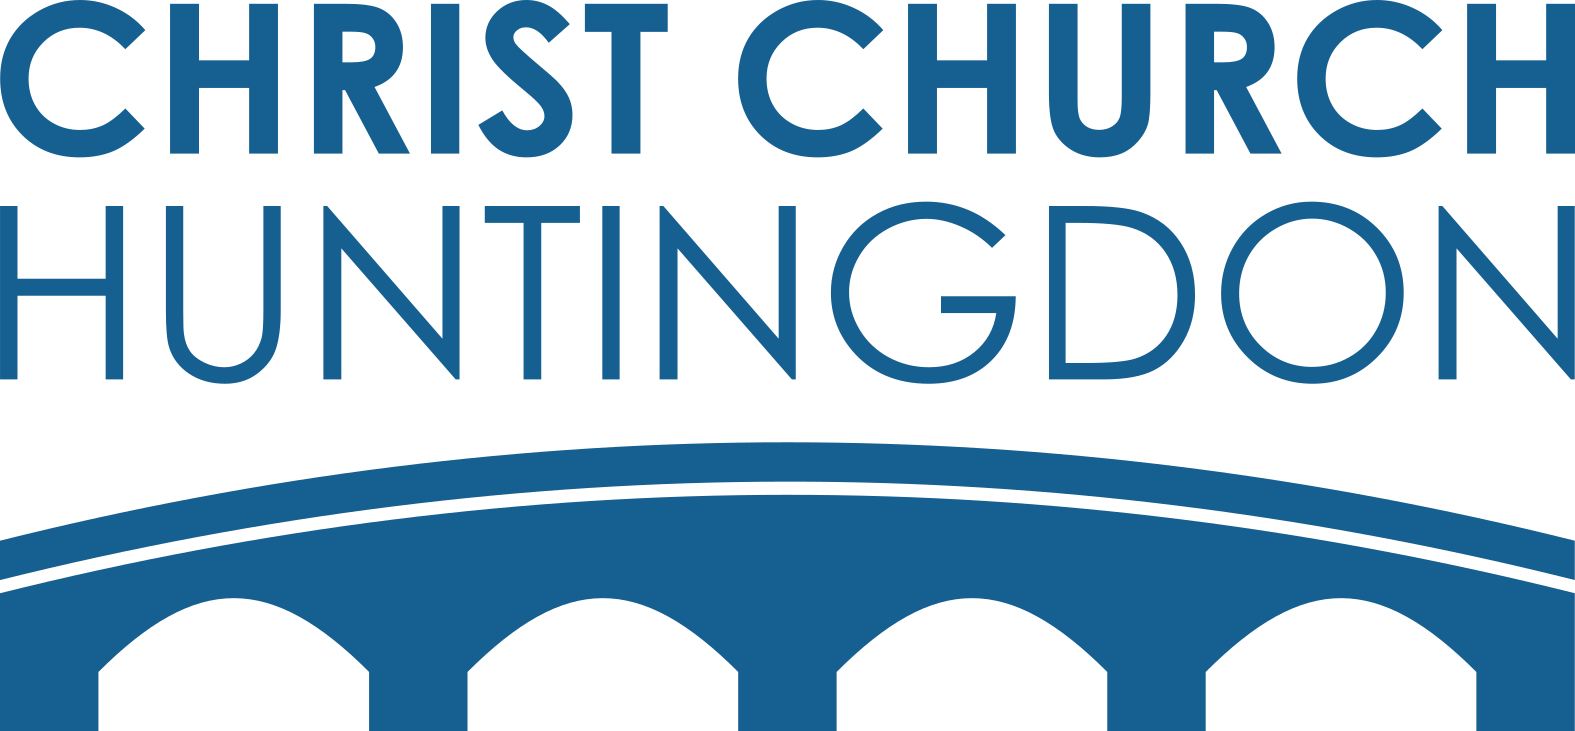 Christ Church Huntingdon